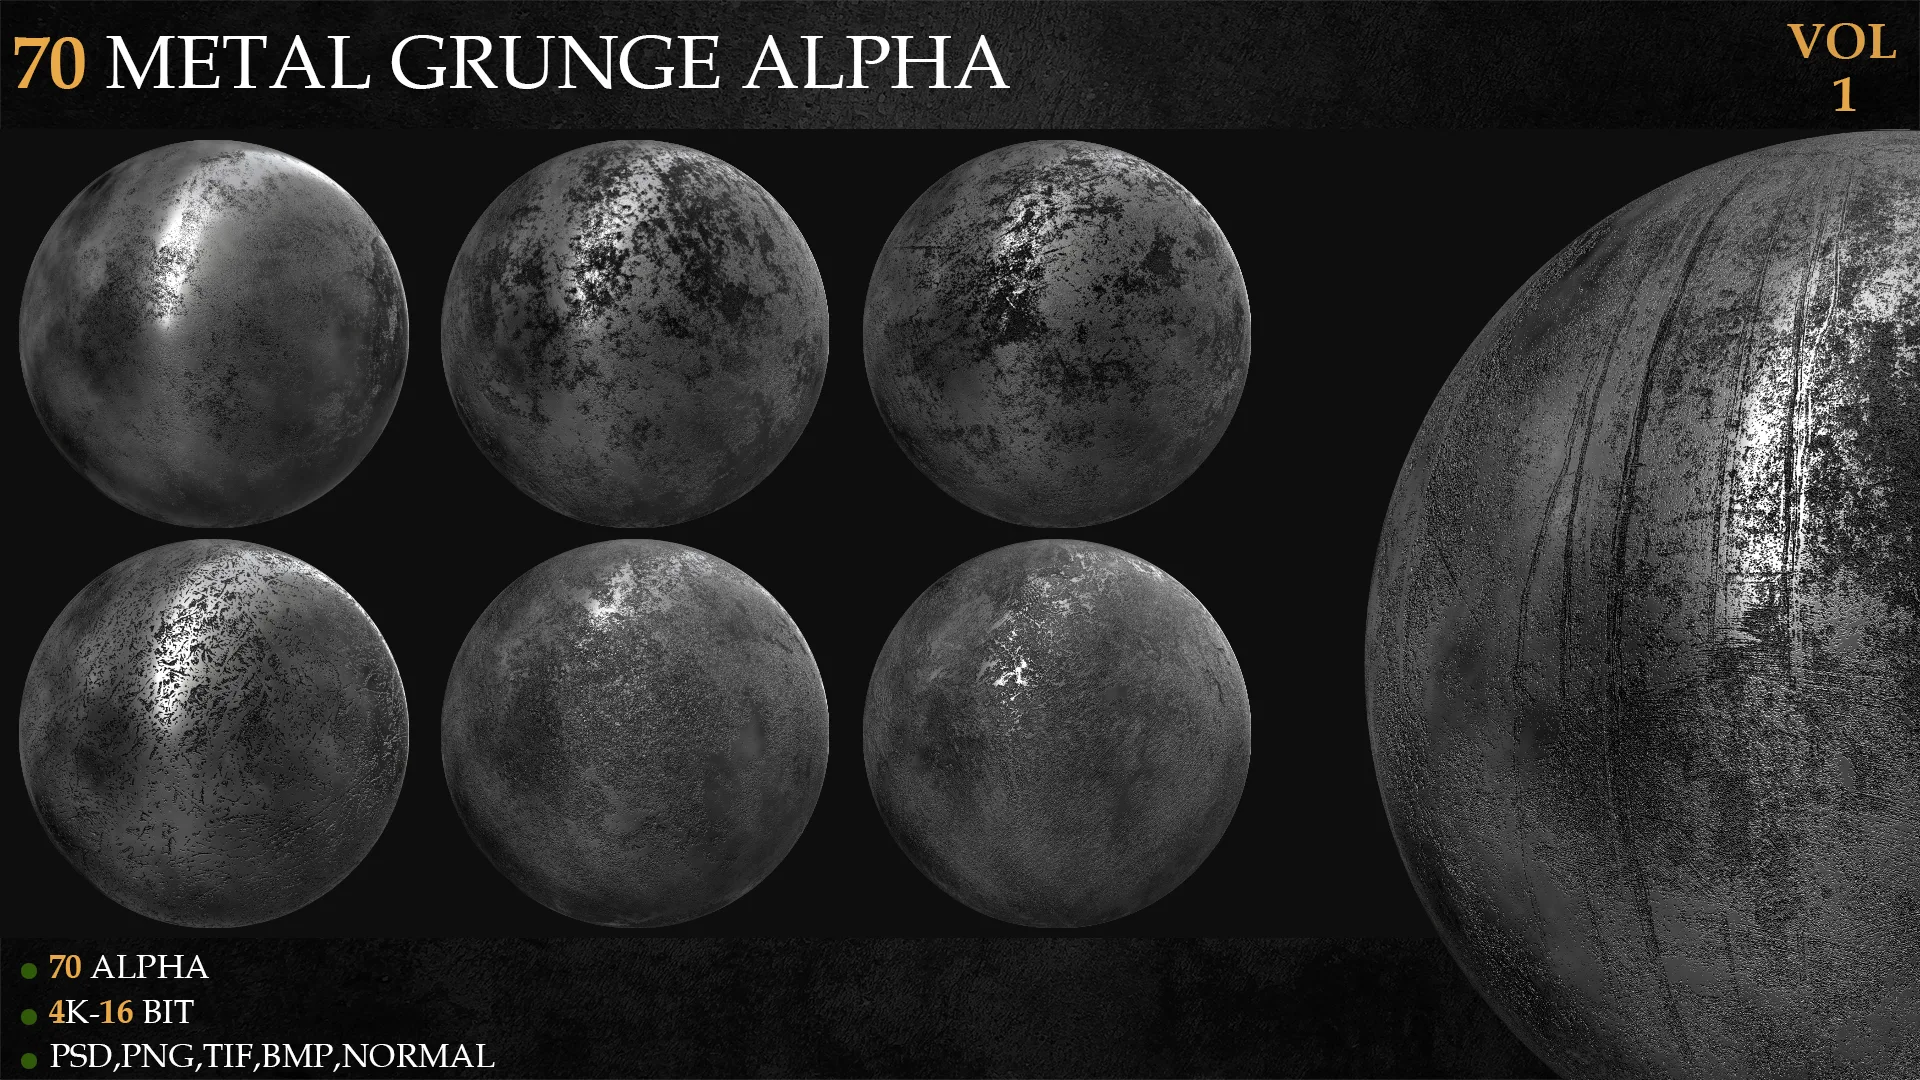 70 Metal Grunge Alpha-VOL 1